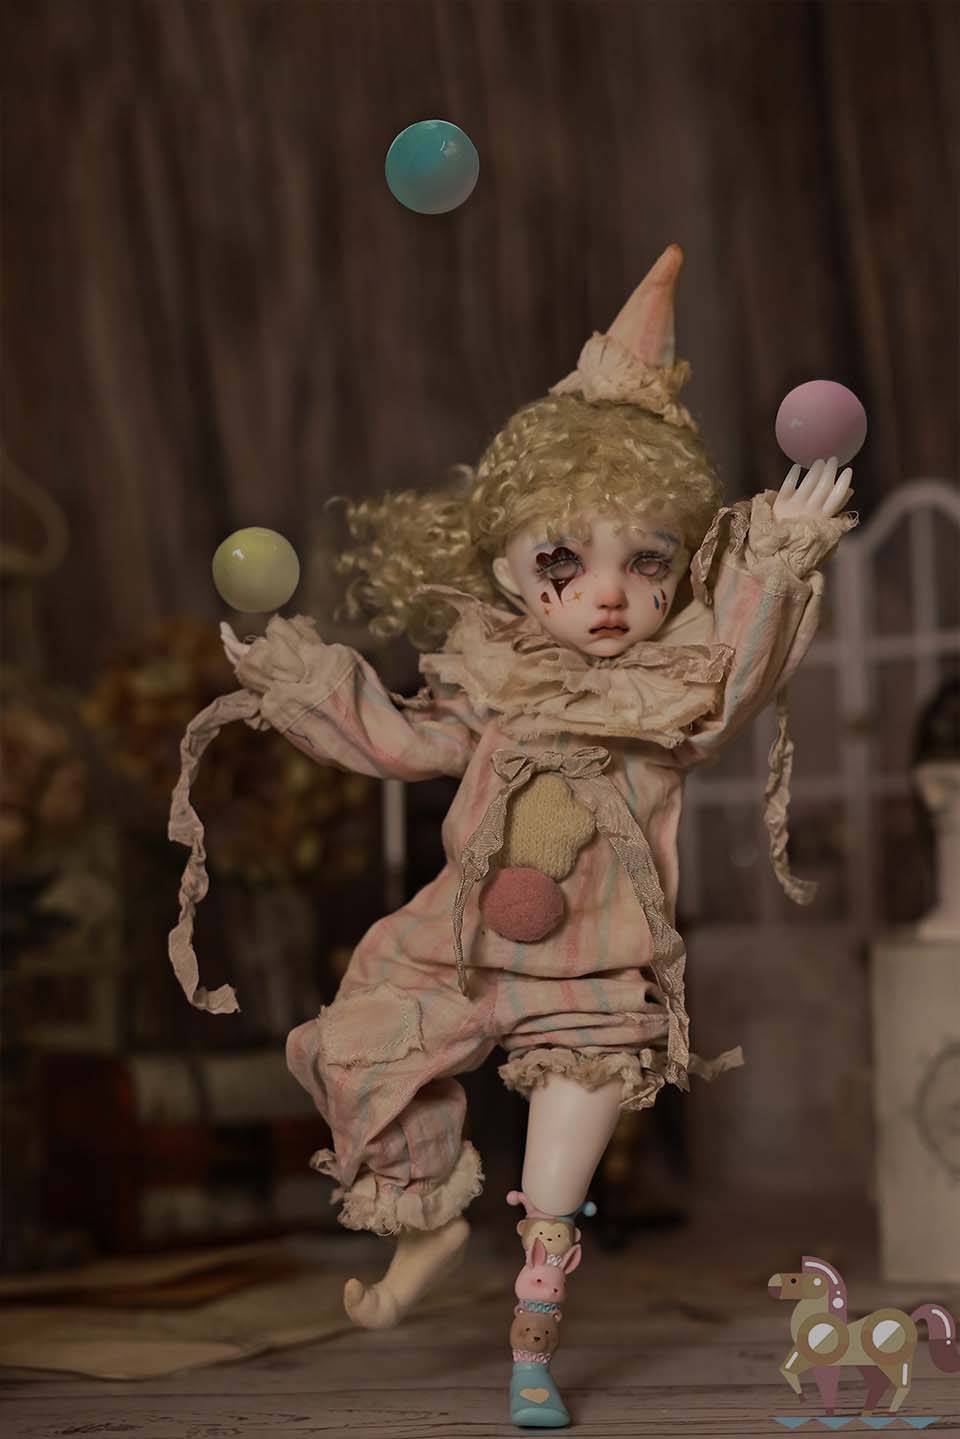 creepy doll, scary dolls, creepy dolls for sale, haunted doll, horror dolls, scary dolls for sale, creepy halloween dolls